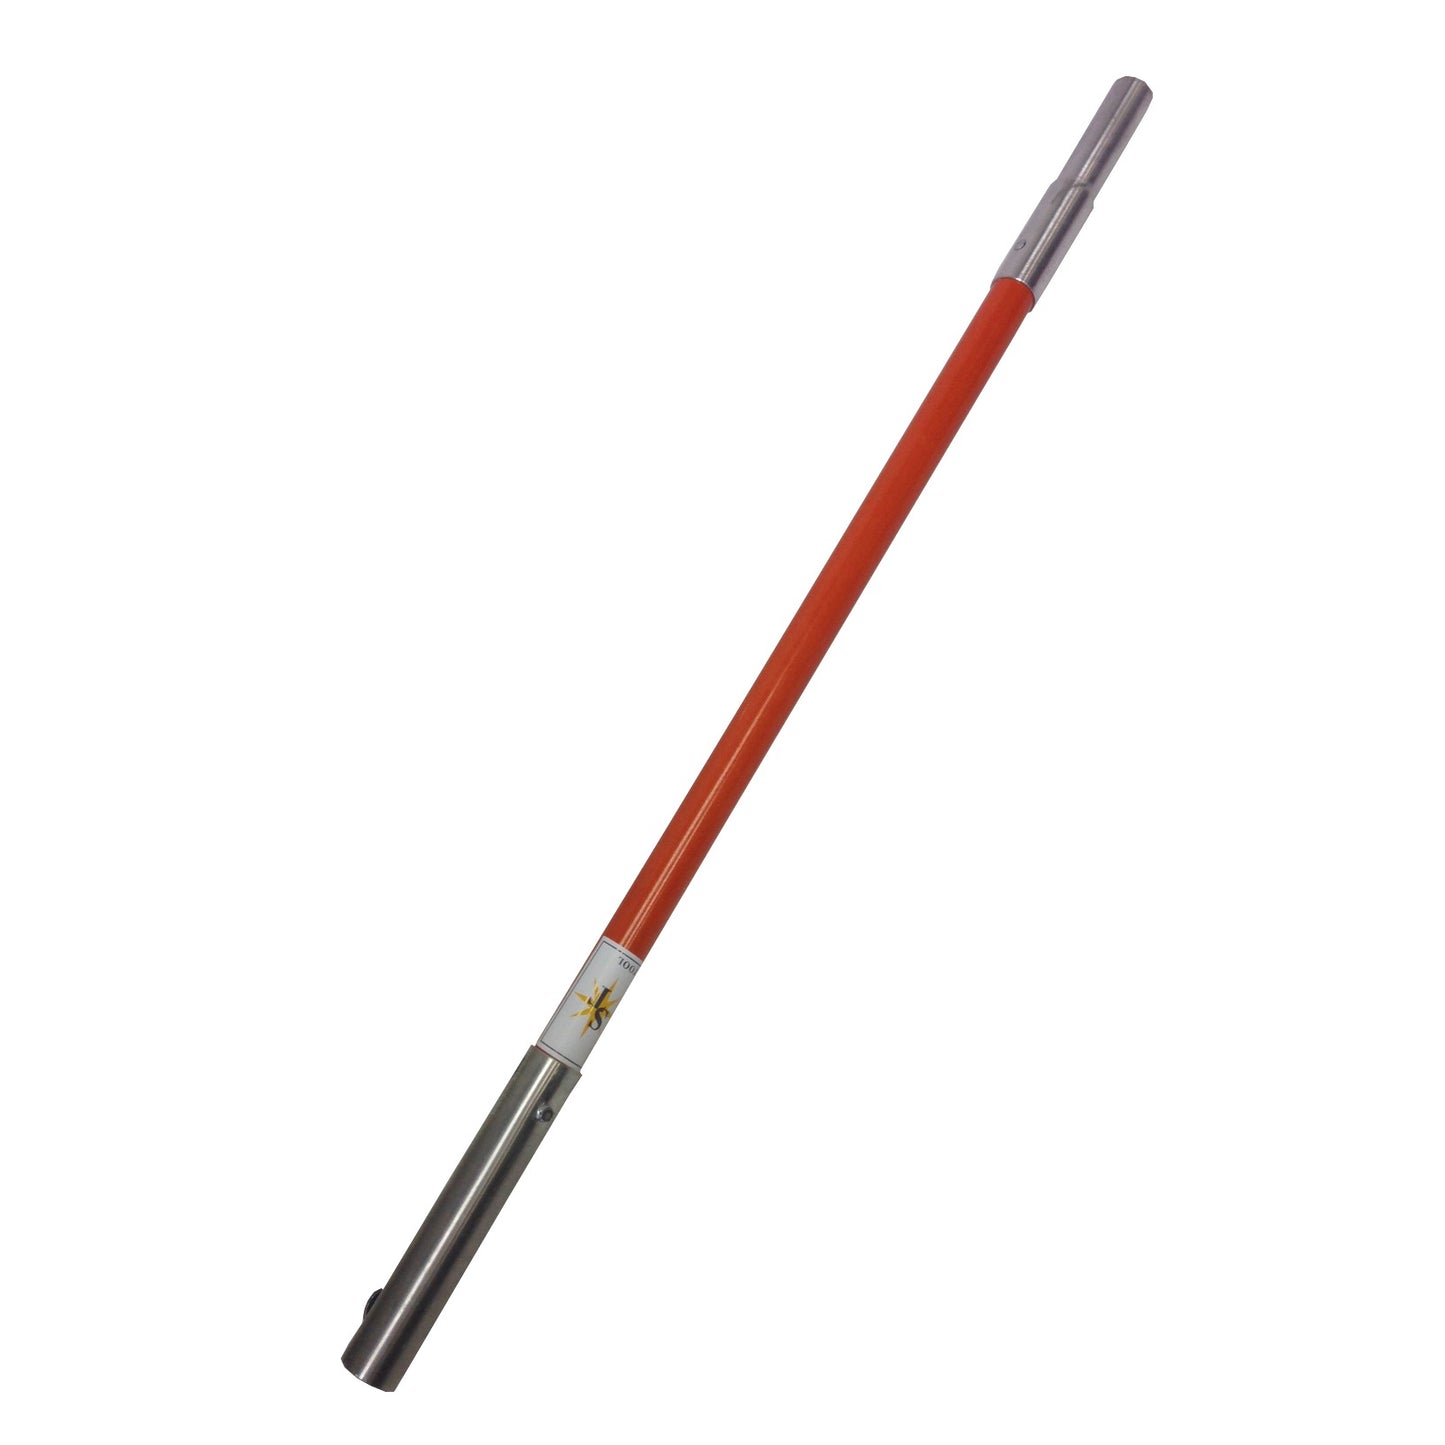 Fiberglass Pole for All Sewer Tools